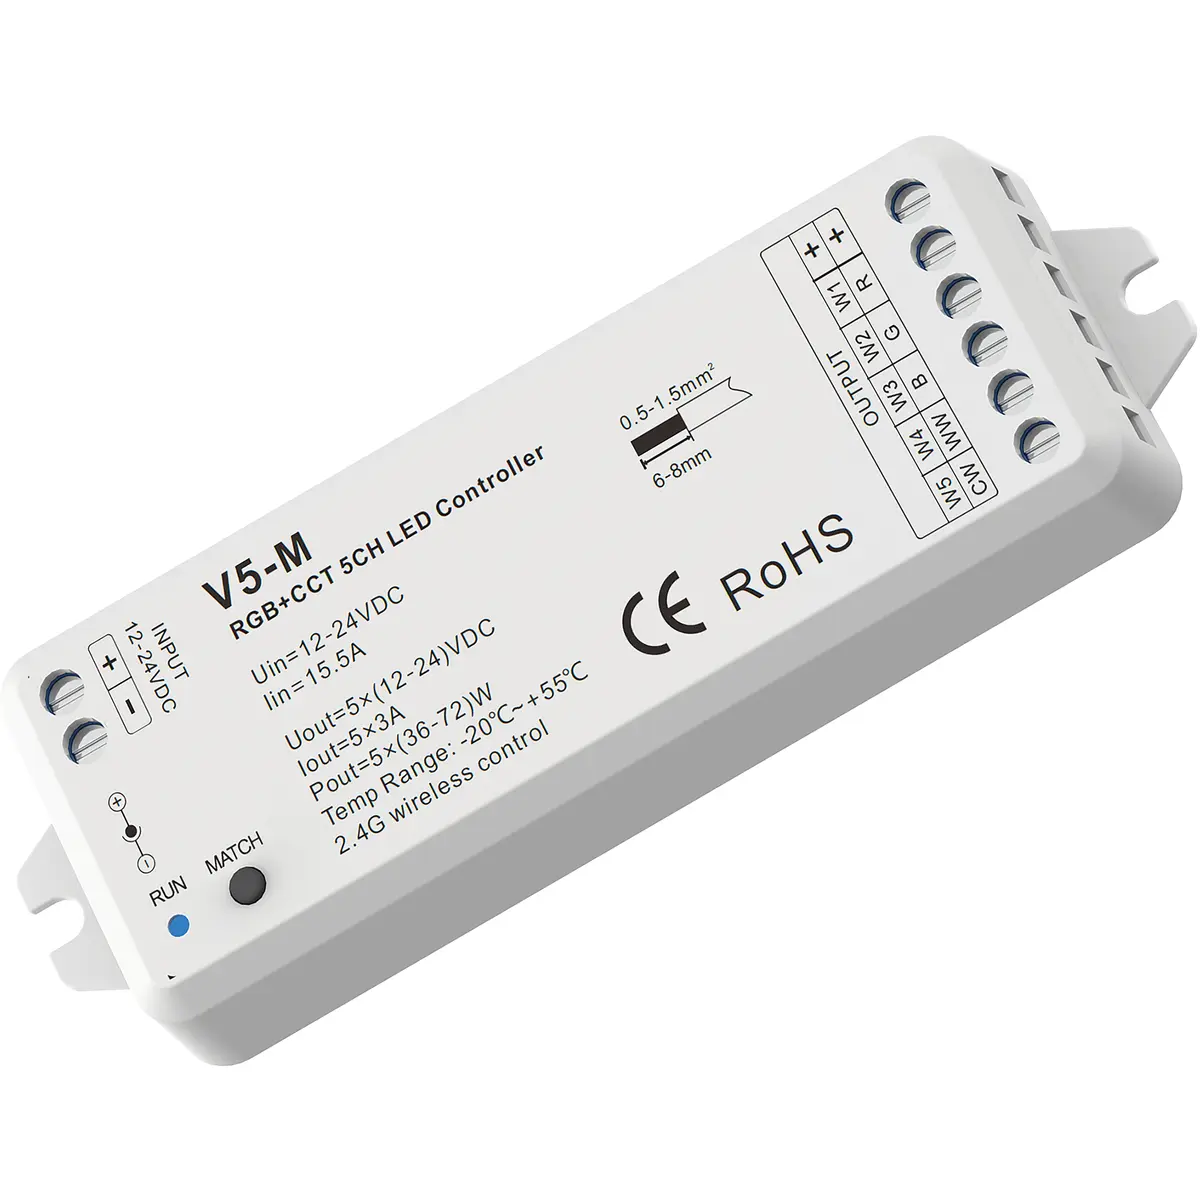 ALLEGRA V5-M RGBW+WW LED CONTROLLER